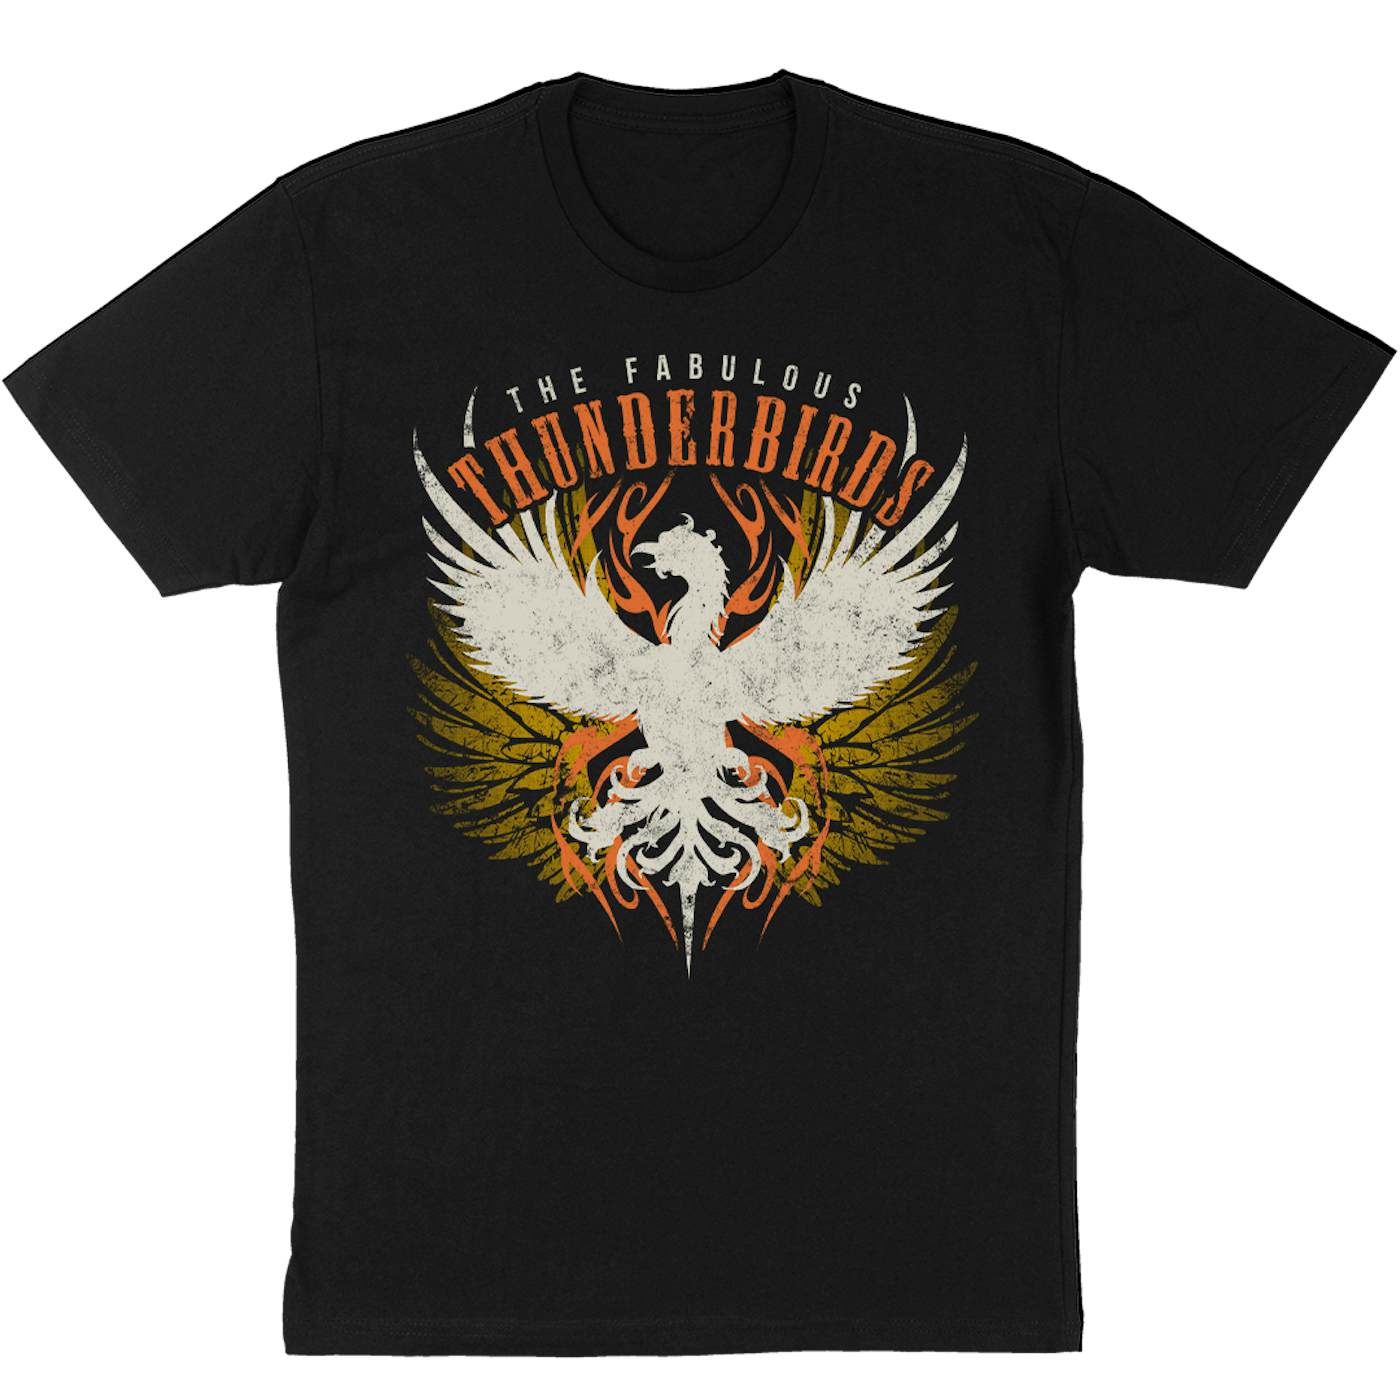 The Fabulous Thunderbirds "On the Verge" T-Shirt